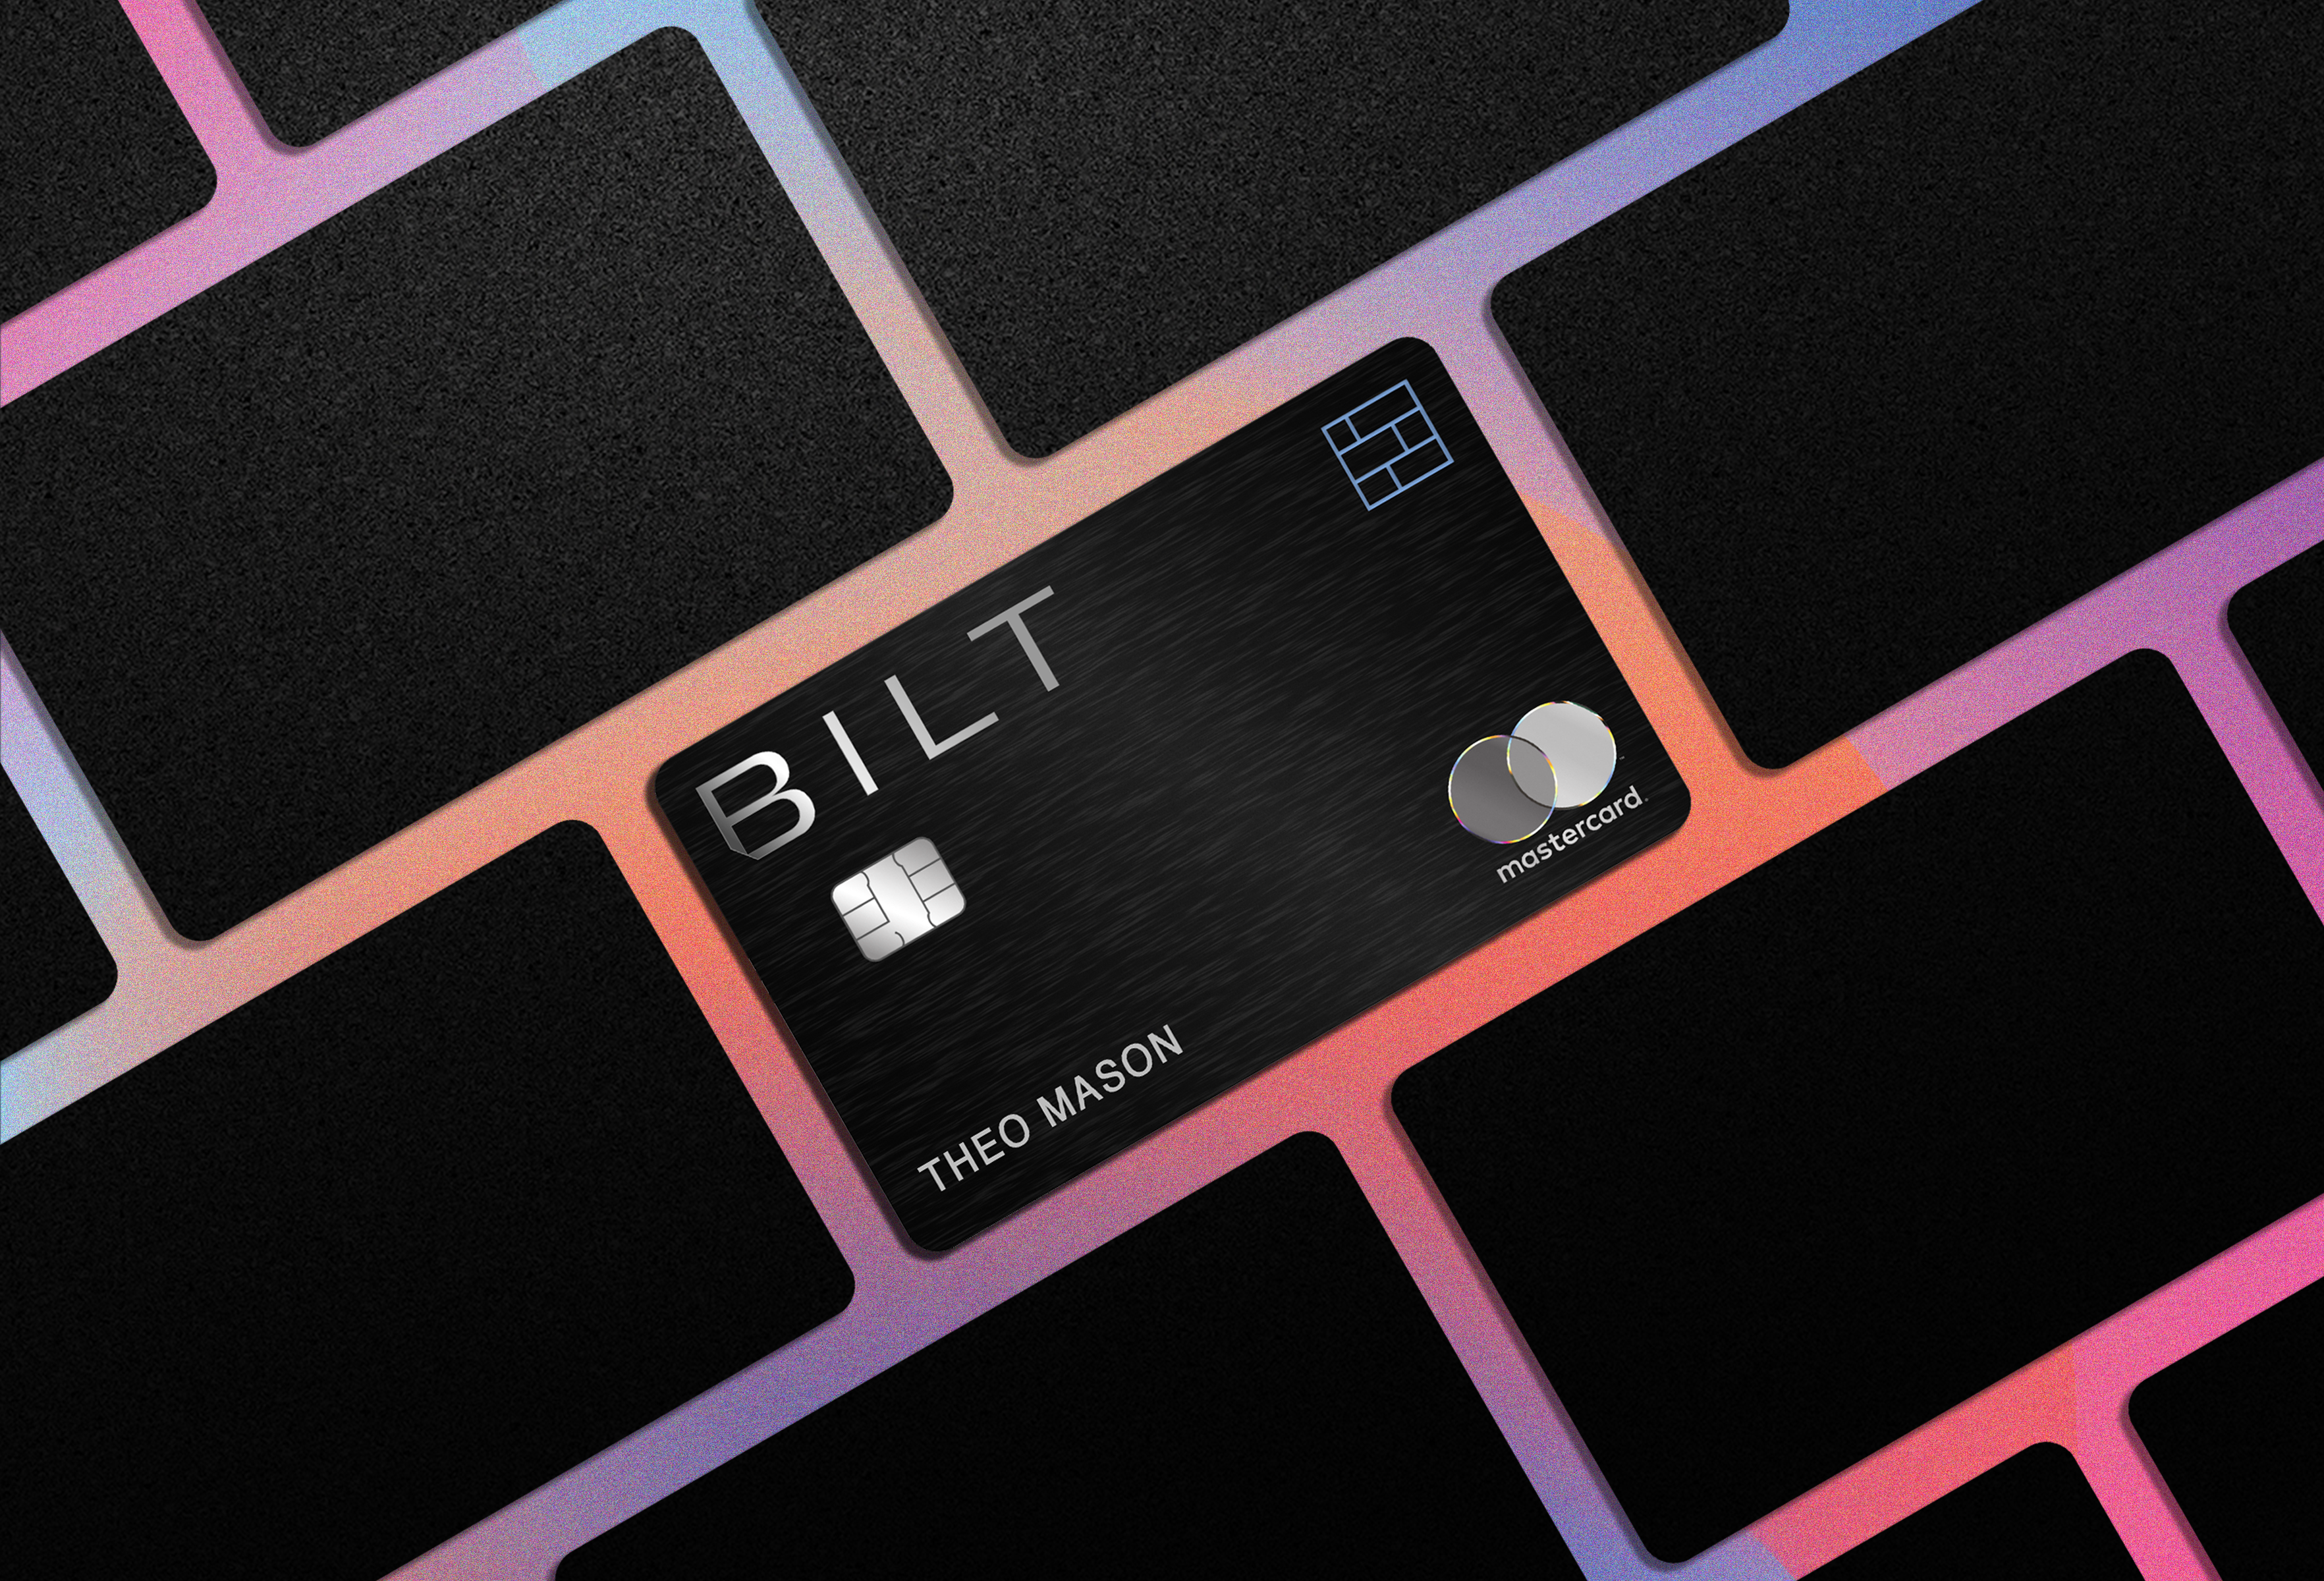 a black credit card on a keyboard